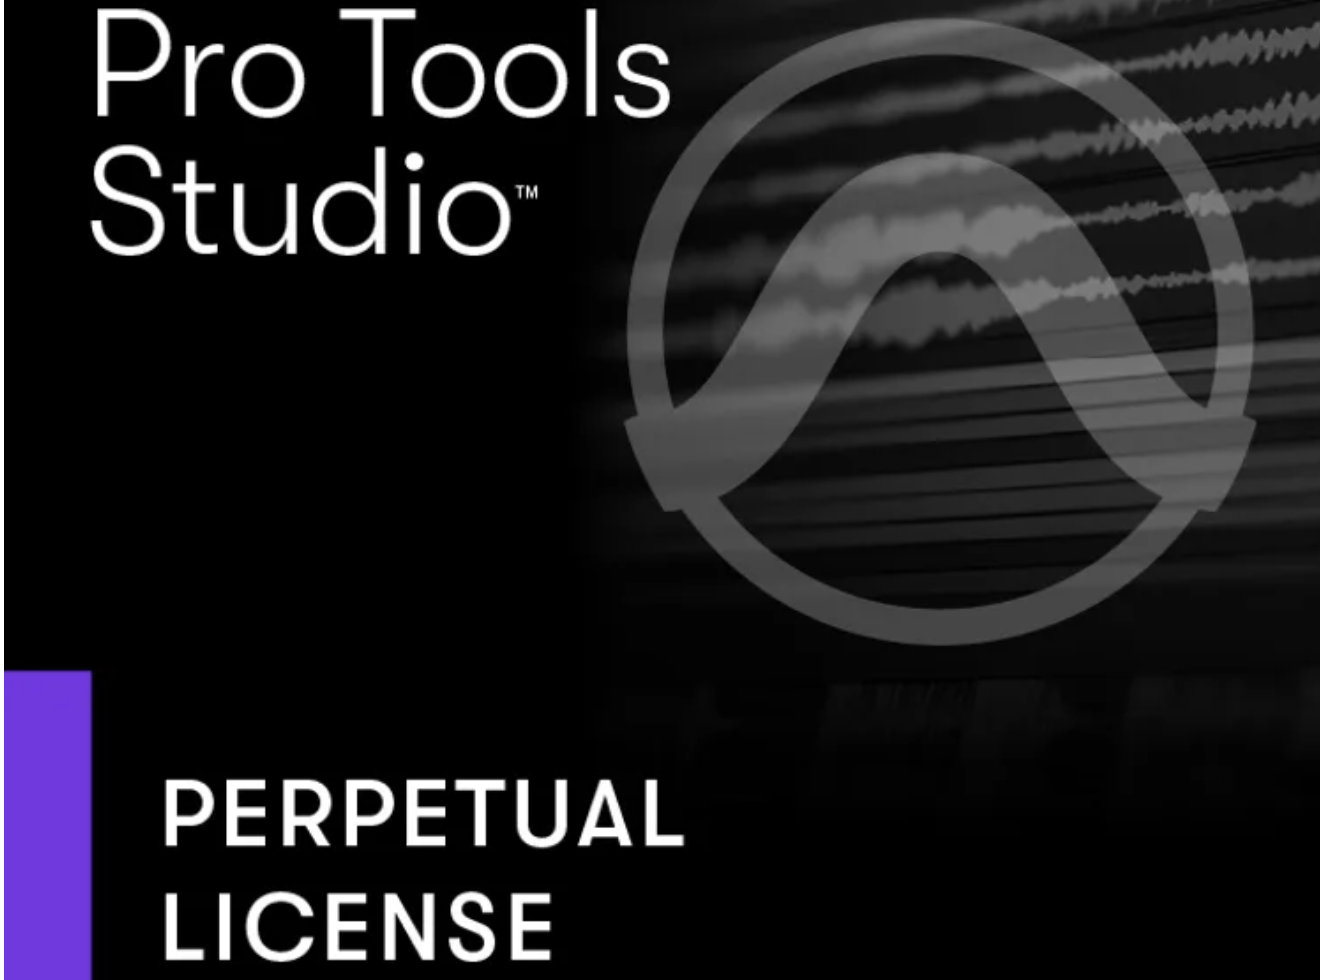 Avid Pro Tools Studio - Perpetual License